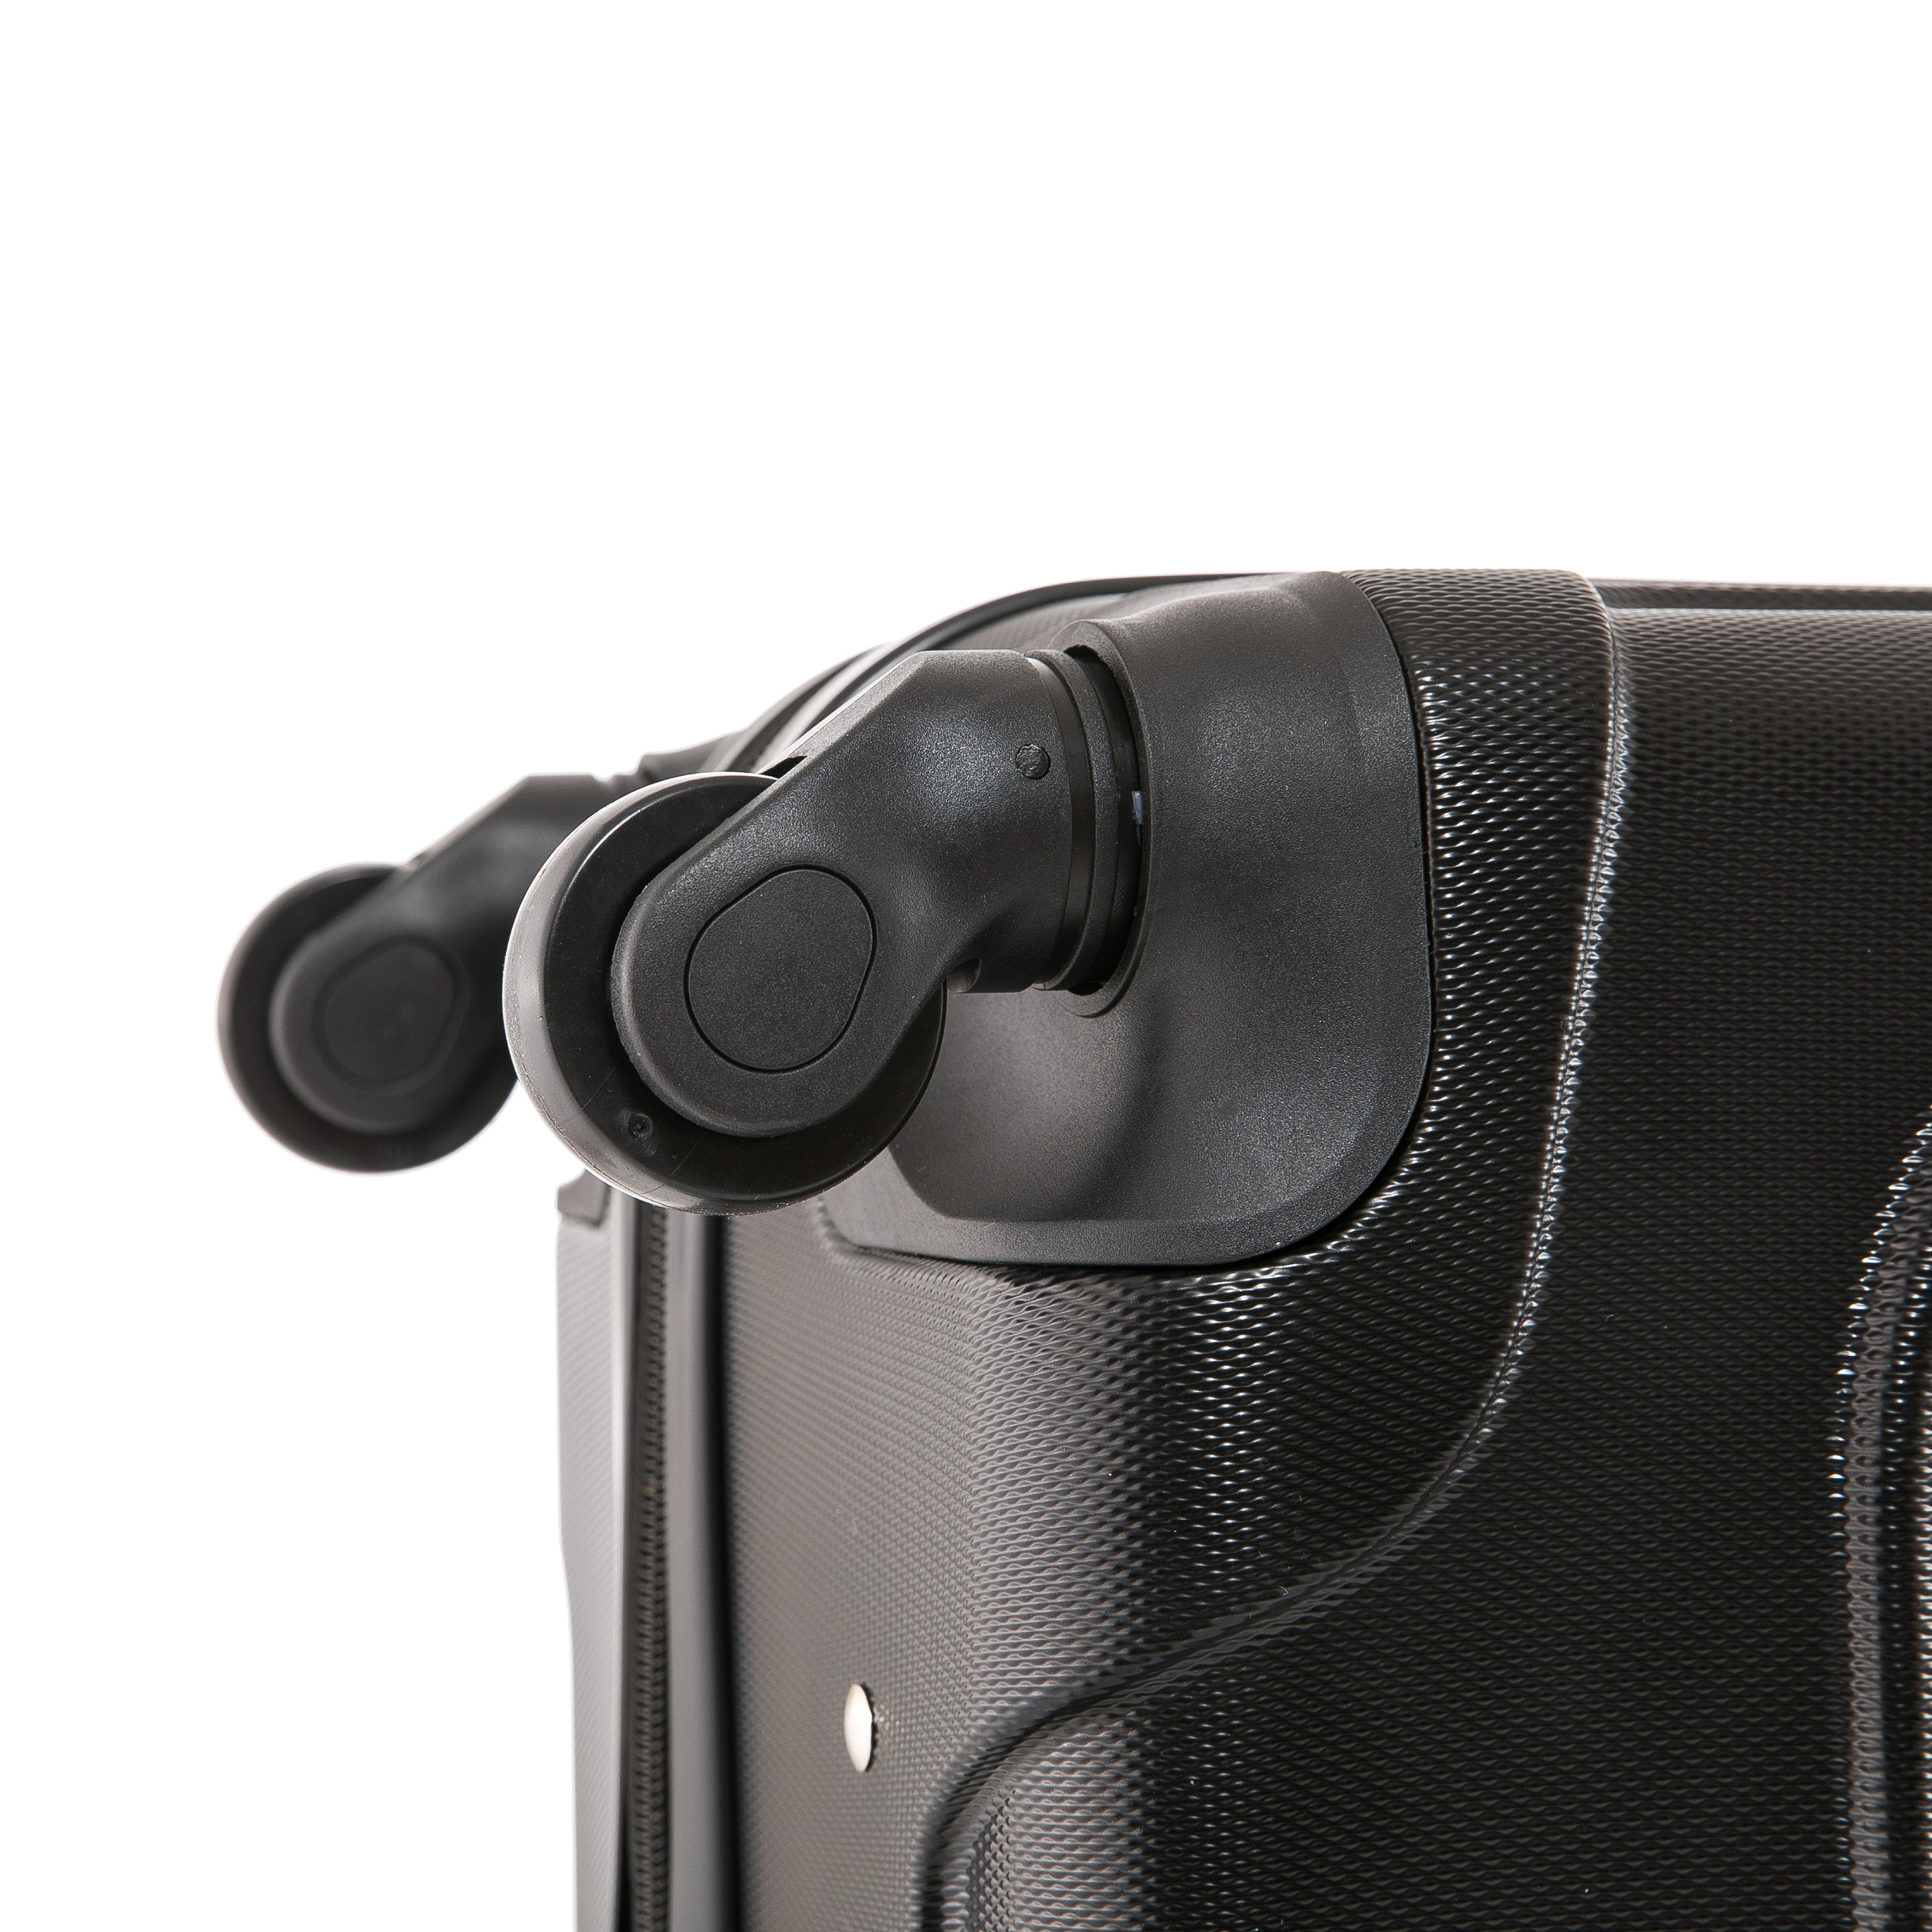 InUSA Endurance Lightweight Hardside Spinner 3 Piece Luggage set  20'',24'', 28'' inch Black